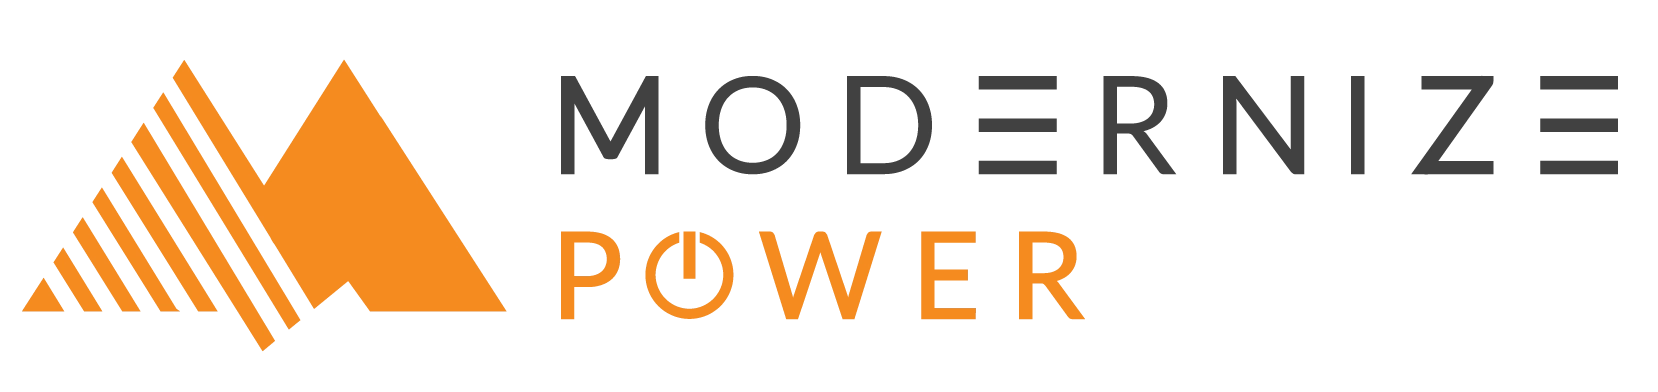 Modernize Power Logo